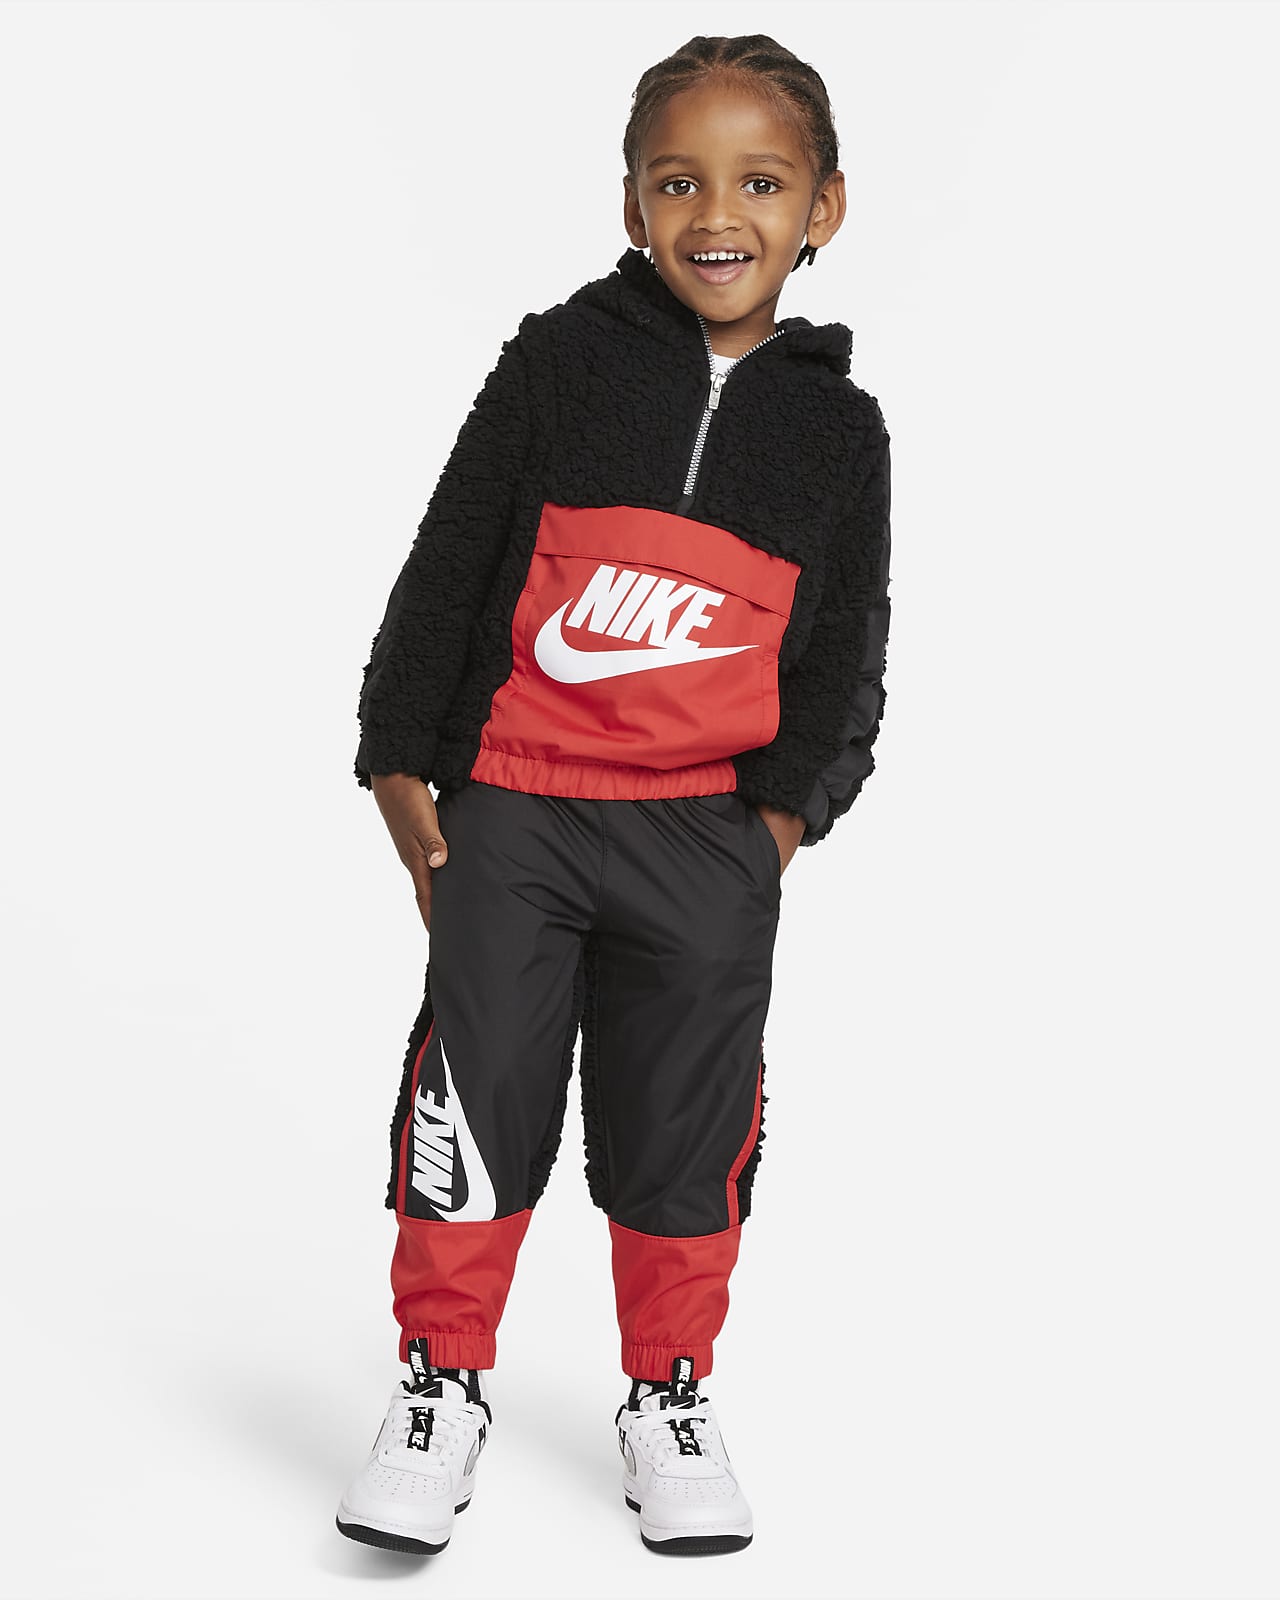 Kids Clothes & Kids Sportswear